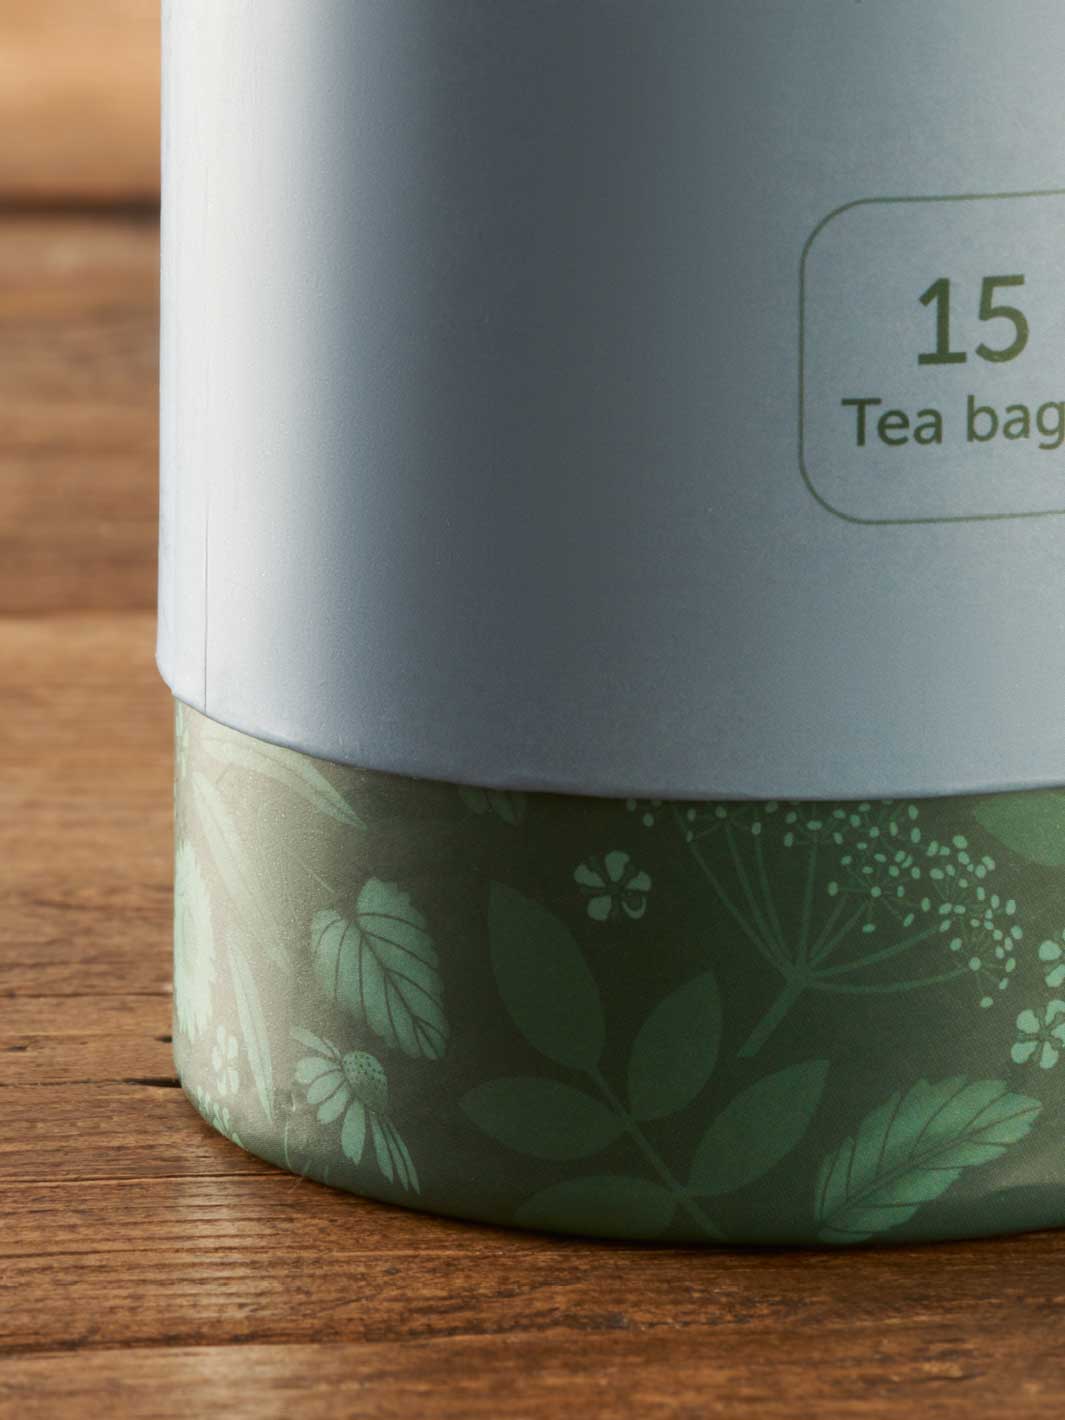 A telescopic cardboard tube packaging for tea bags.